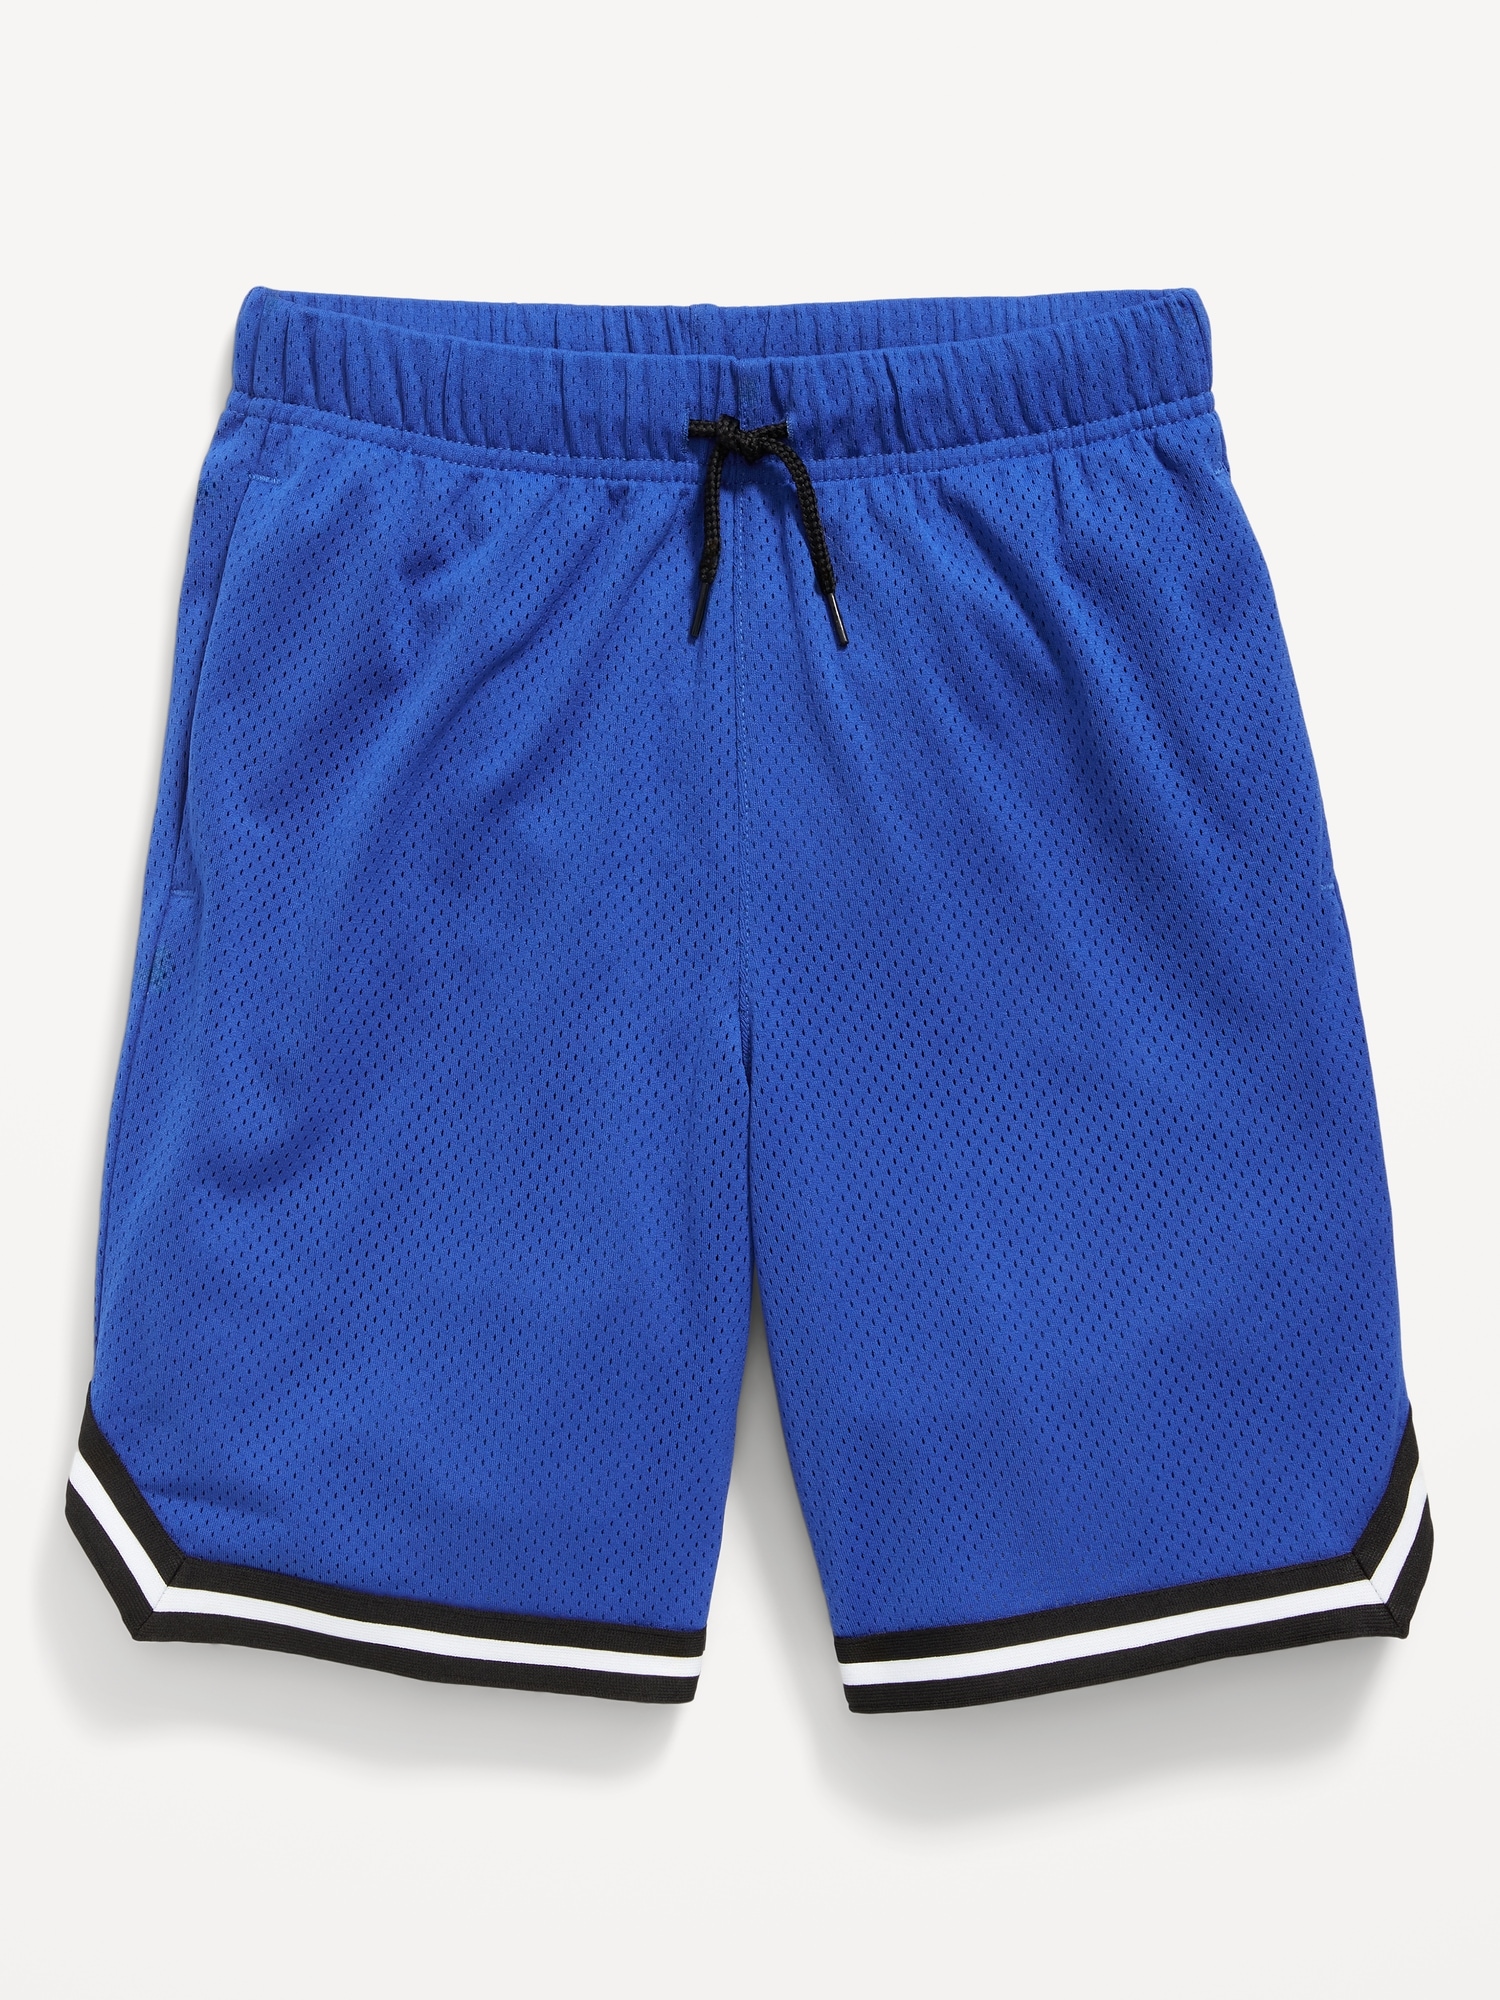 Blue Jean Shorts Men Shapewear Shorts Beach Shorts Men Tie Dye